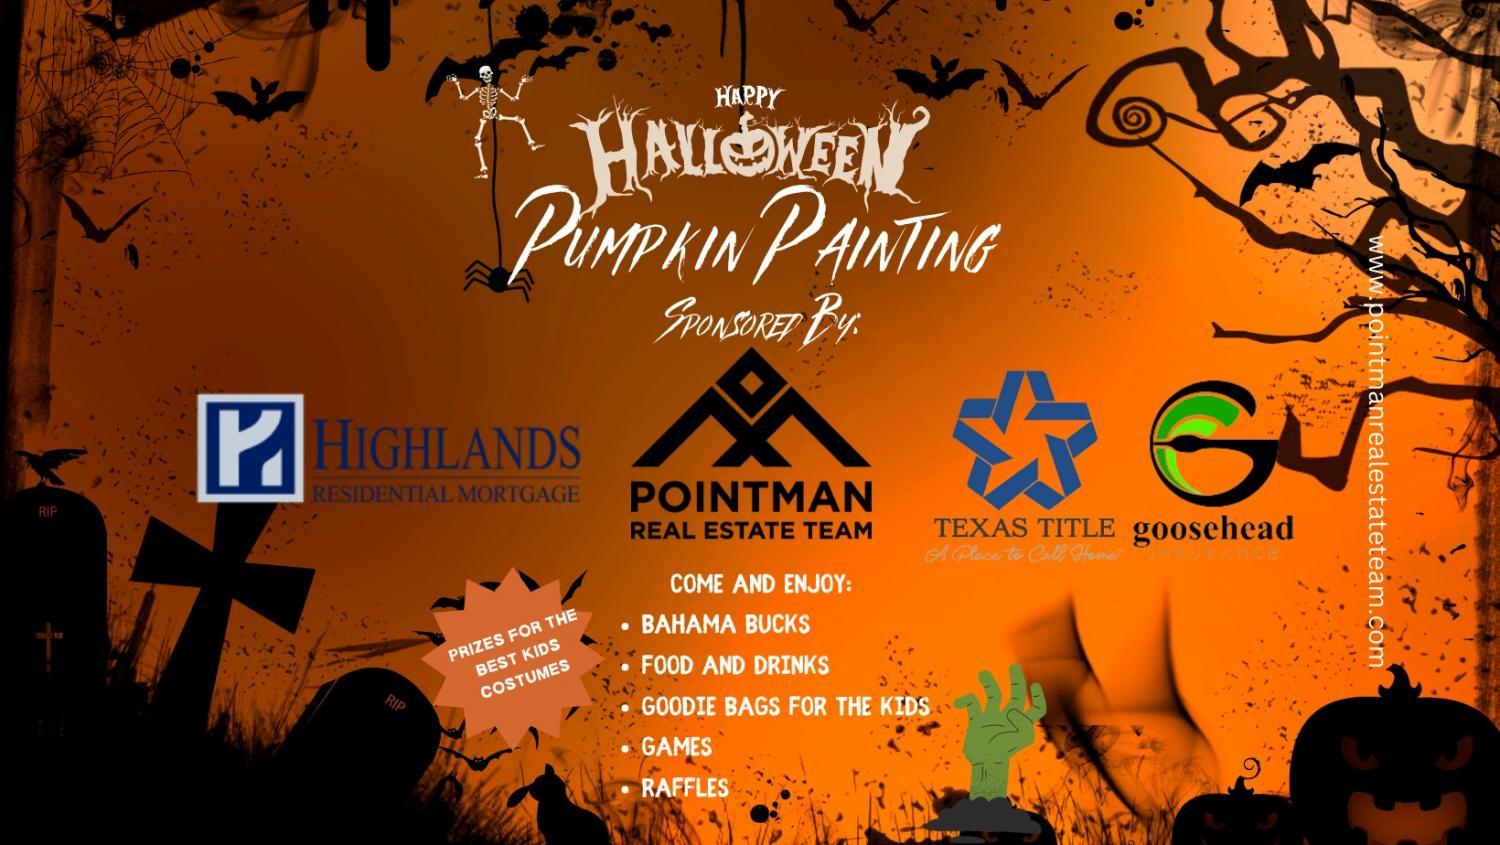 Pointman Halloween Event
Sat Oct 22, 1:00 PM - Sat Oct 22, 4:00 PM
in 3 days